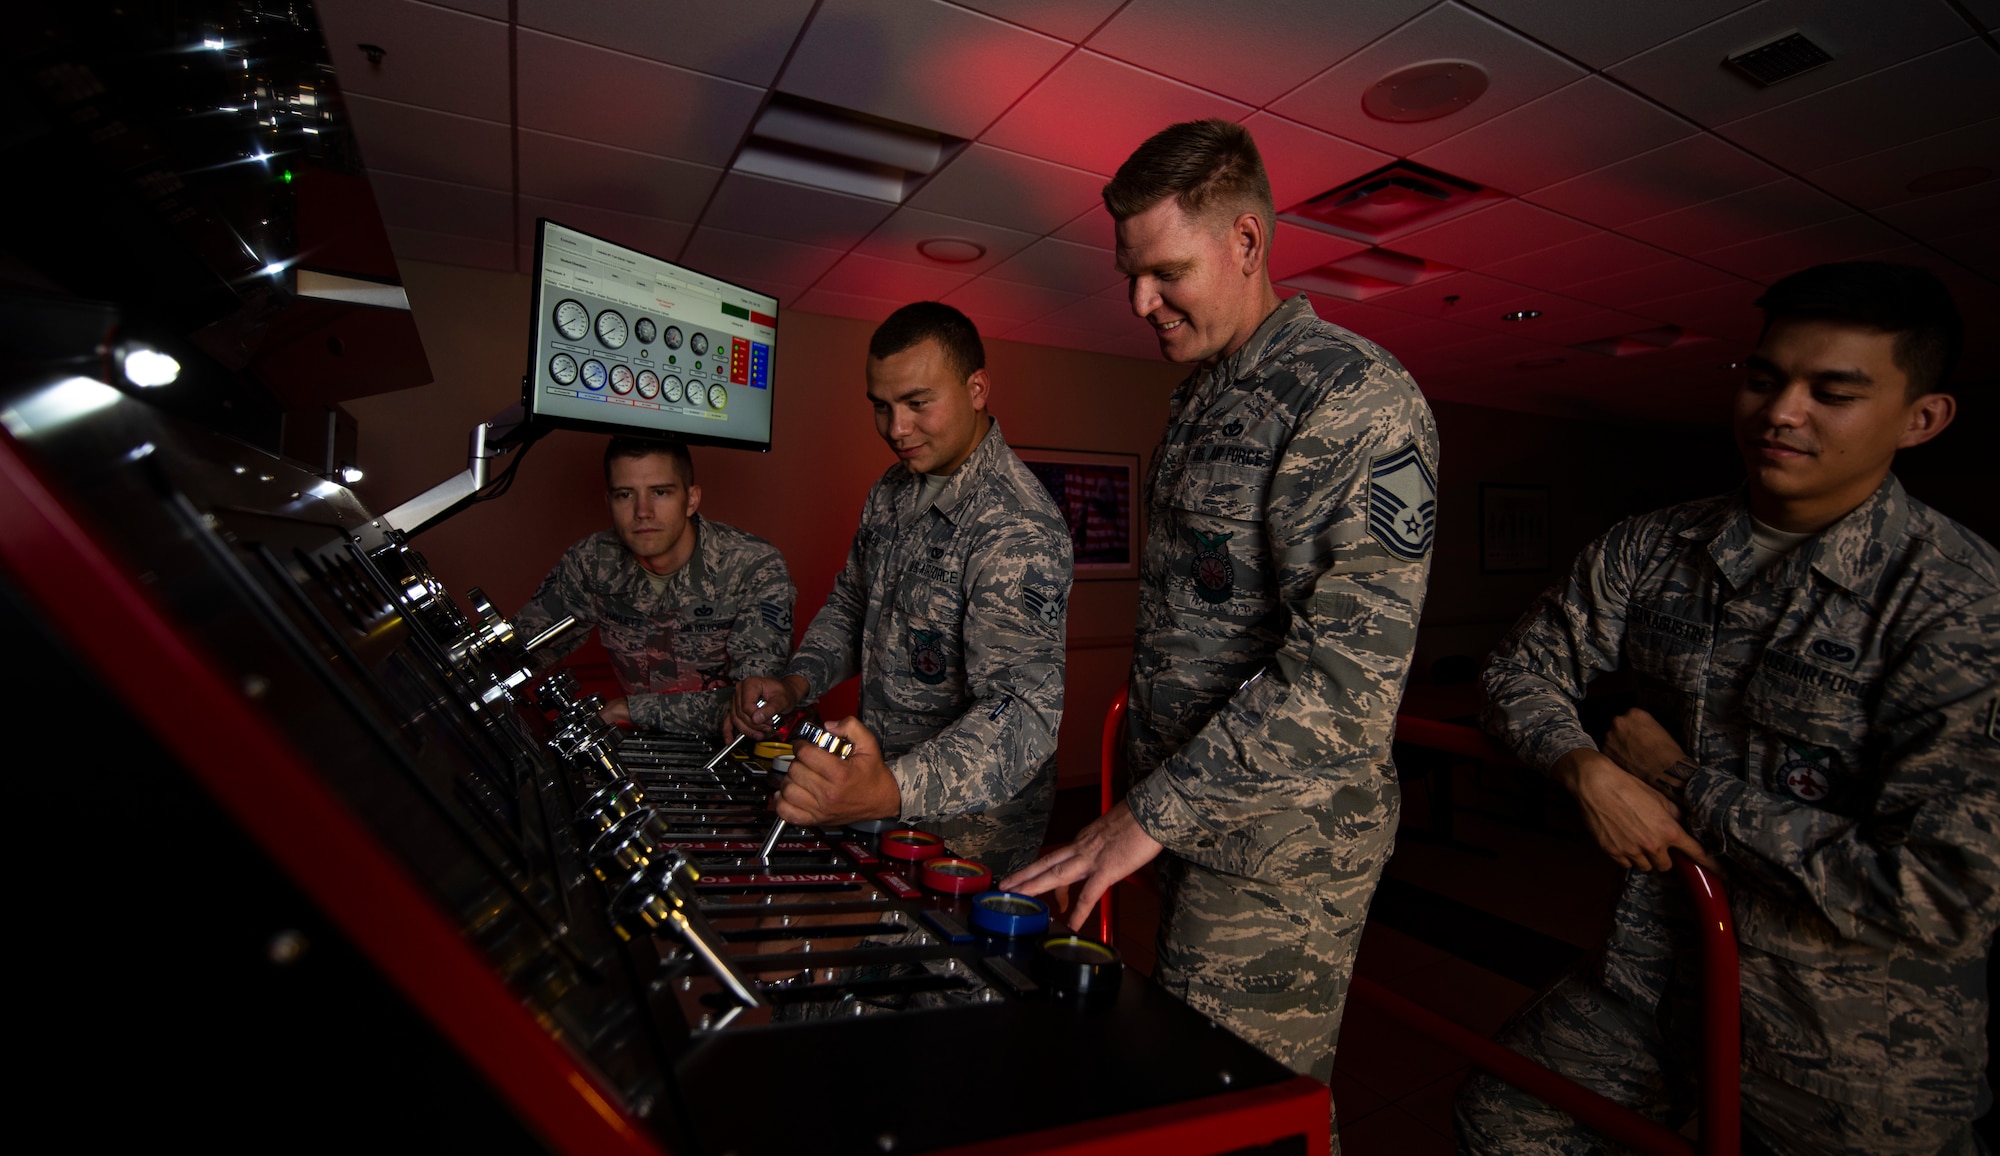 Four Airmen use a fire engine simulator for training.